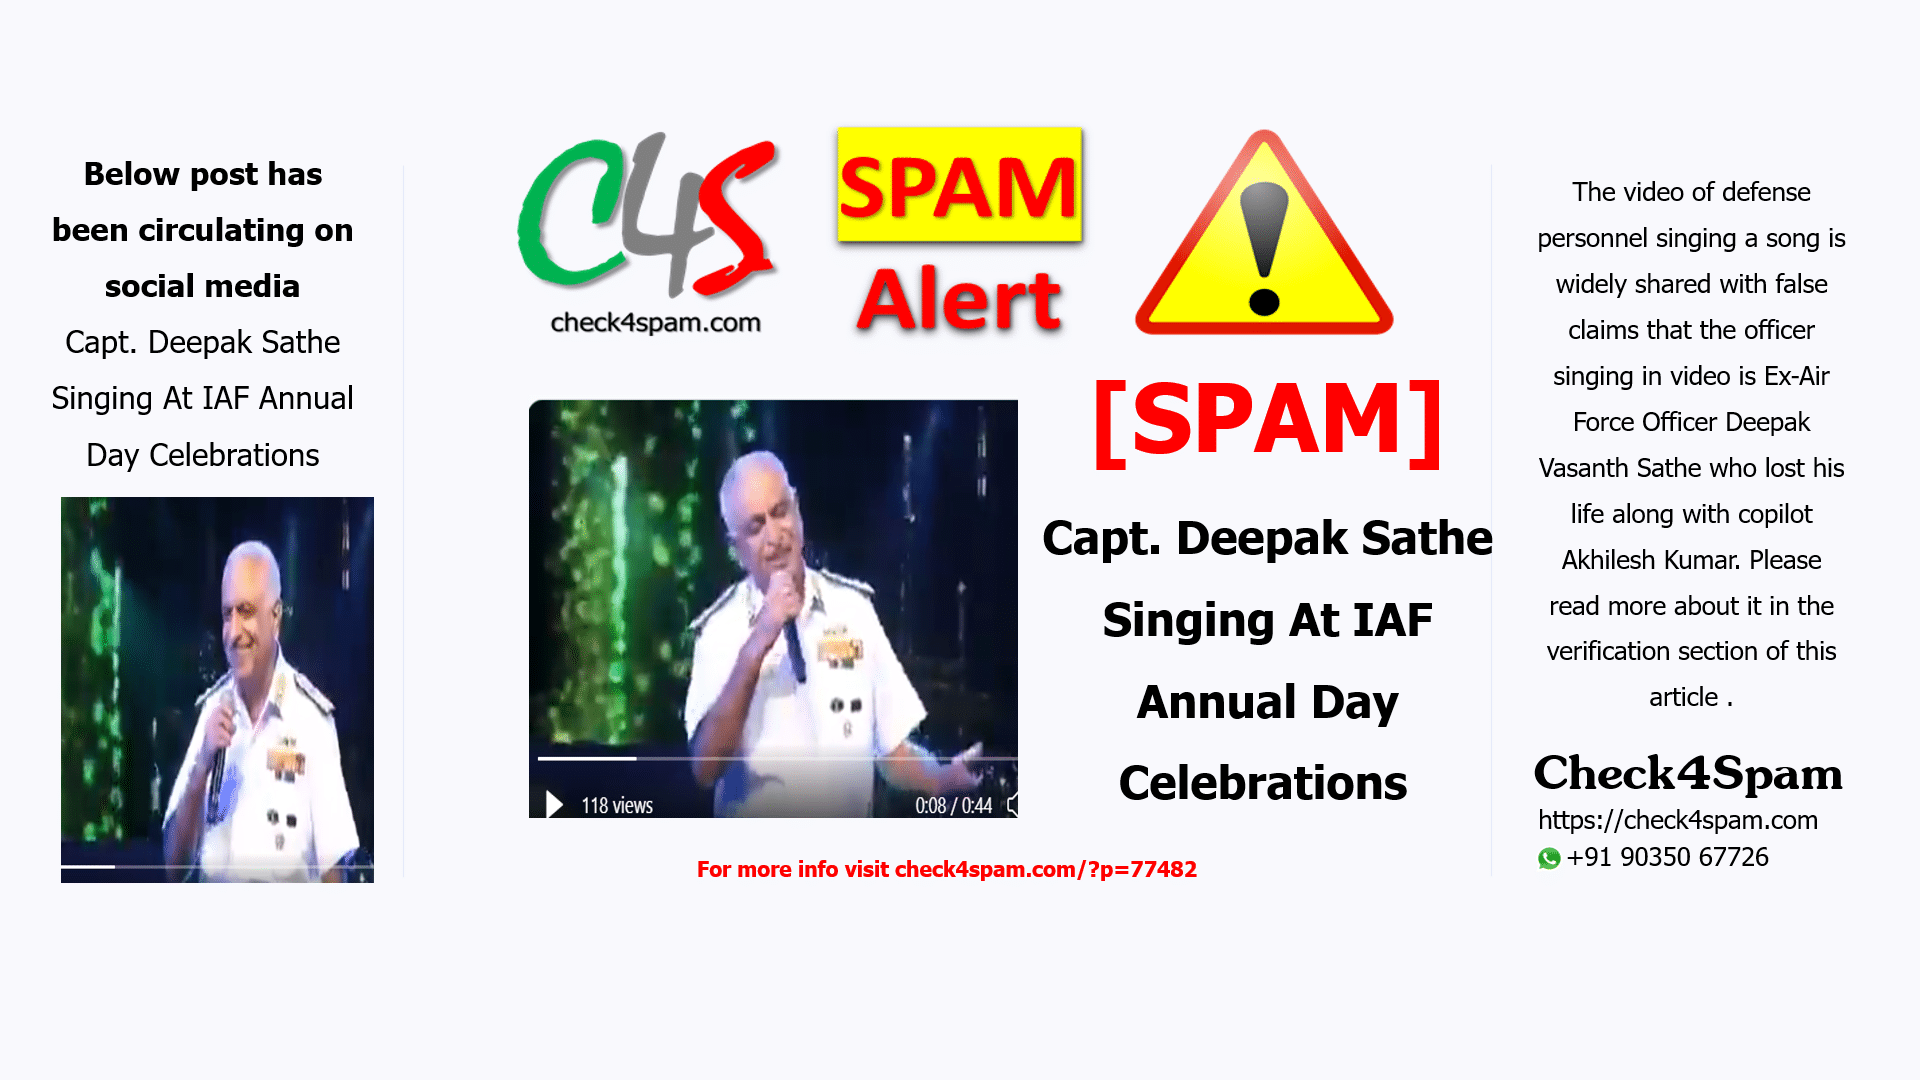 Capt Deepak Sathe Singing At IAF Annual Day Celebrations